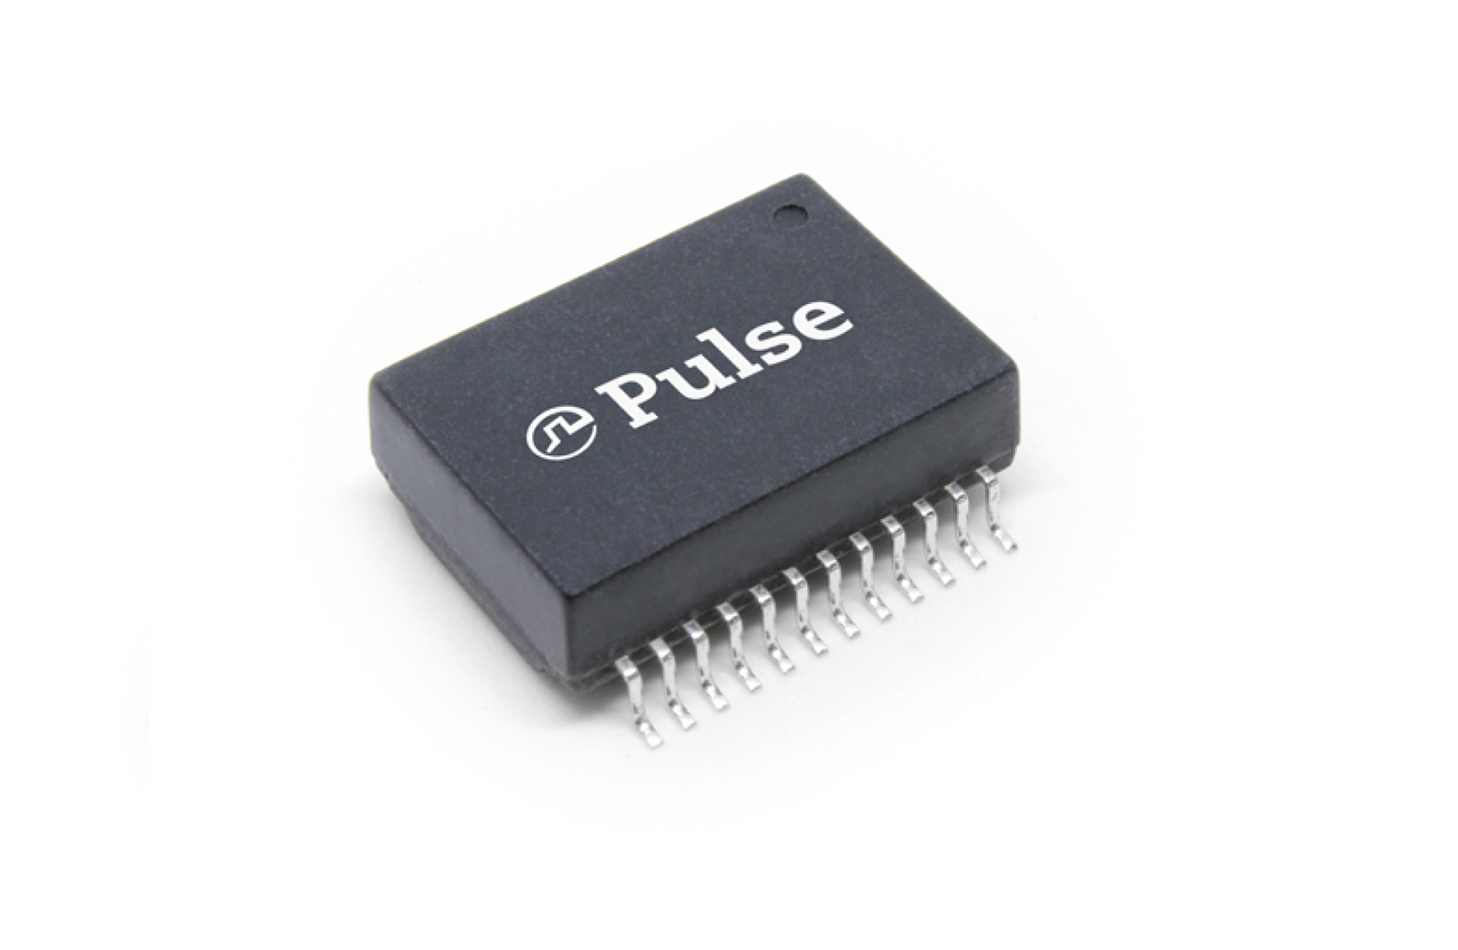 HB5G006HLT by Pulse Electronics